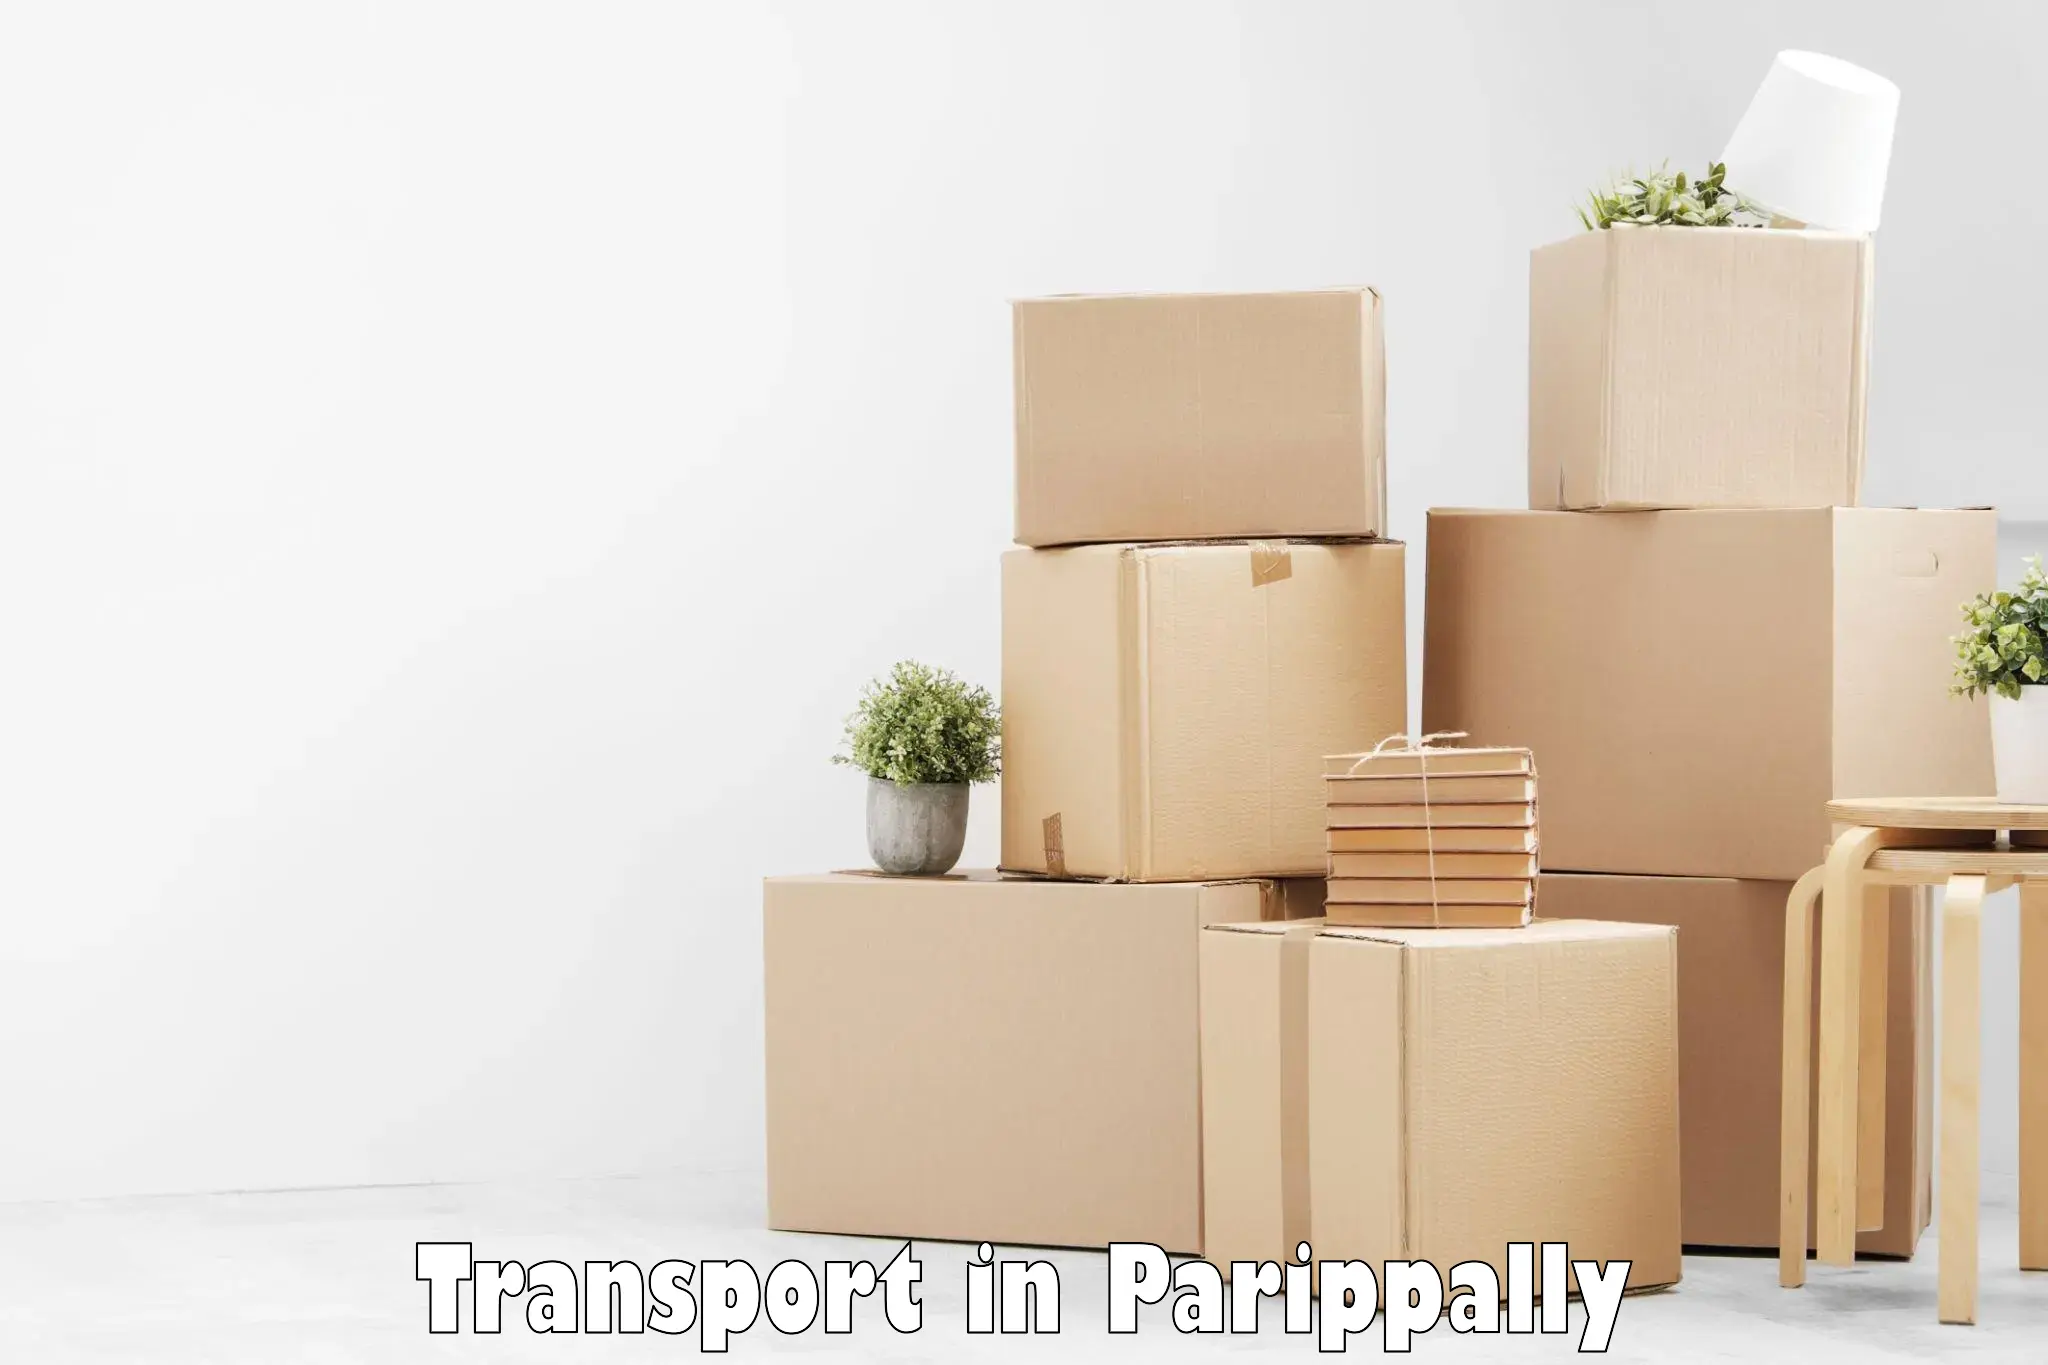 Transport in sharing in Parippally